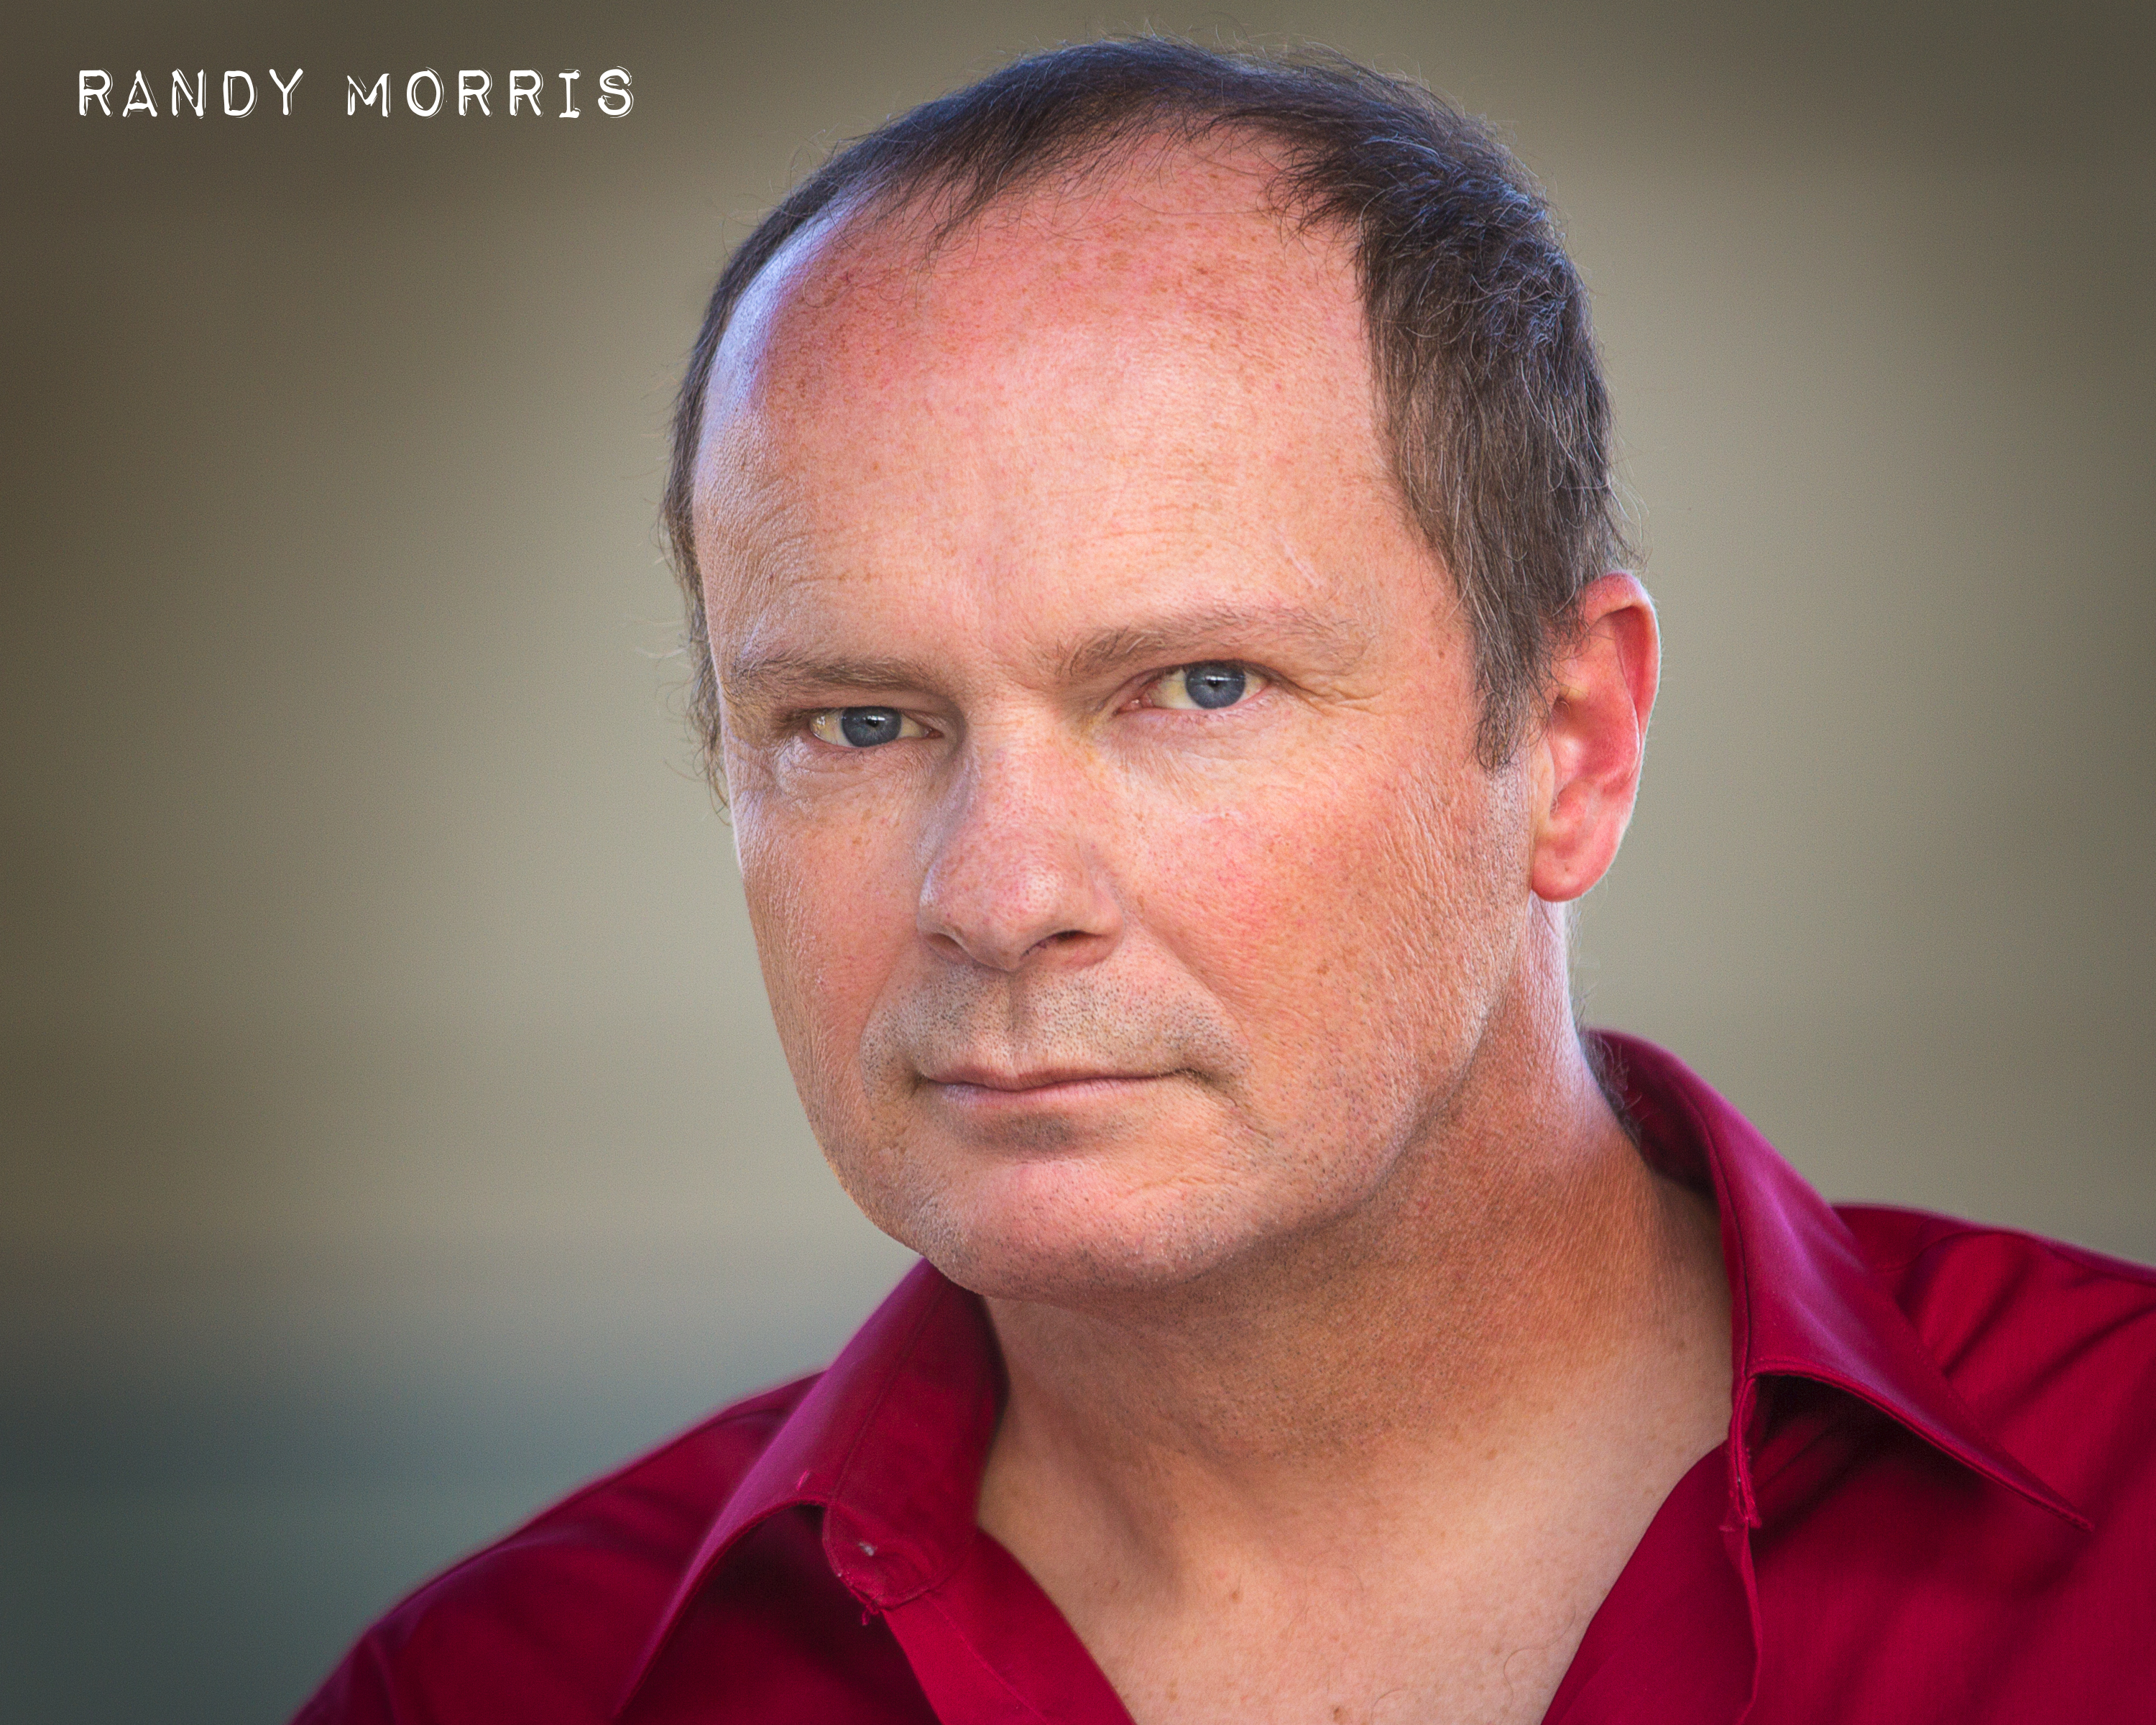 Randy Morris